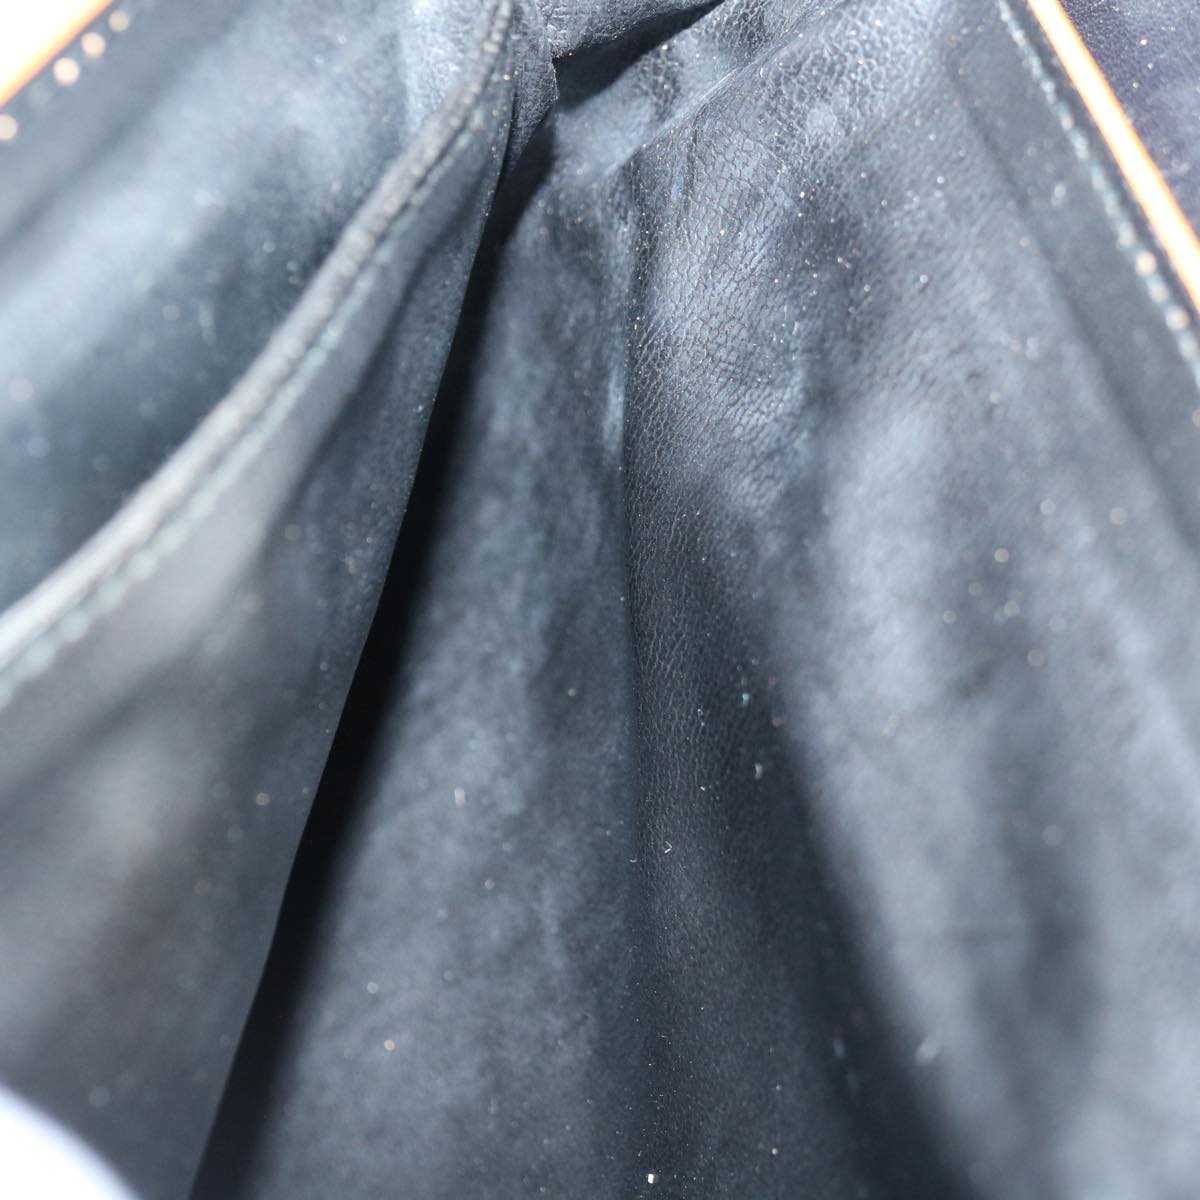 CELINE Clutch Bag Leather Black Auth 68363